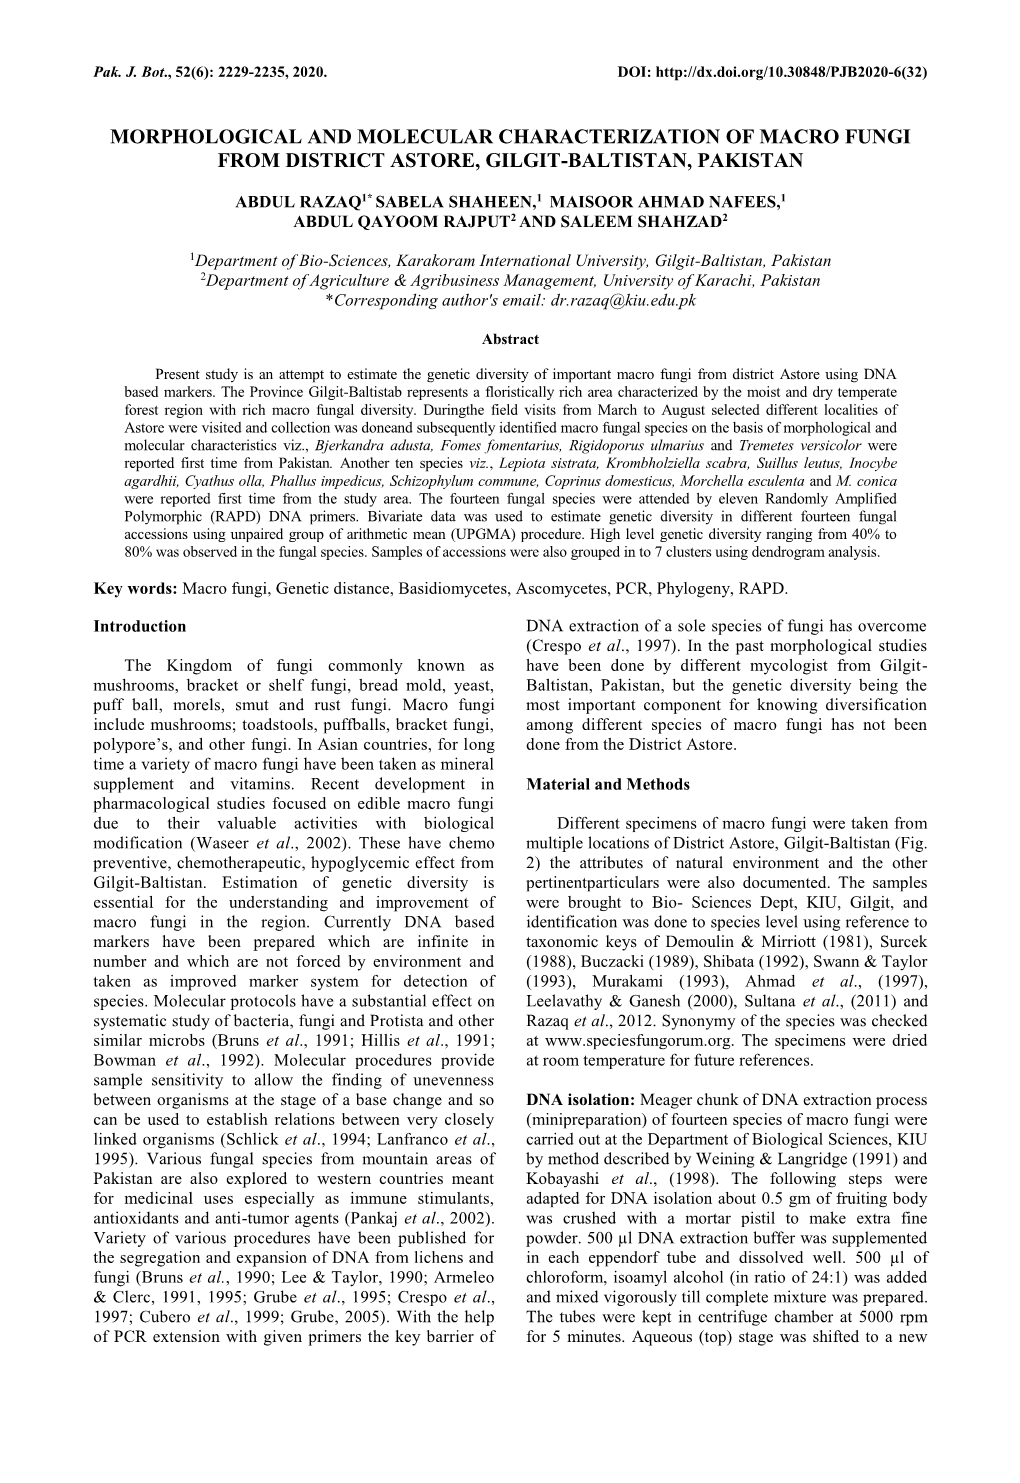 Morphological and Molecular Charactererization of Macro Fungi from District Astore, Gilgit-Baltistan, Pakistan